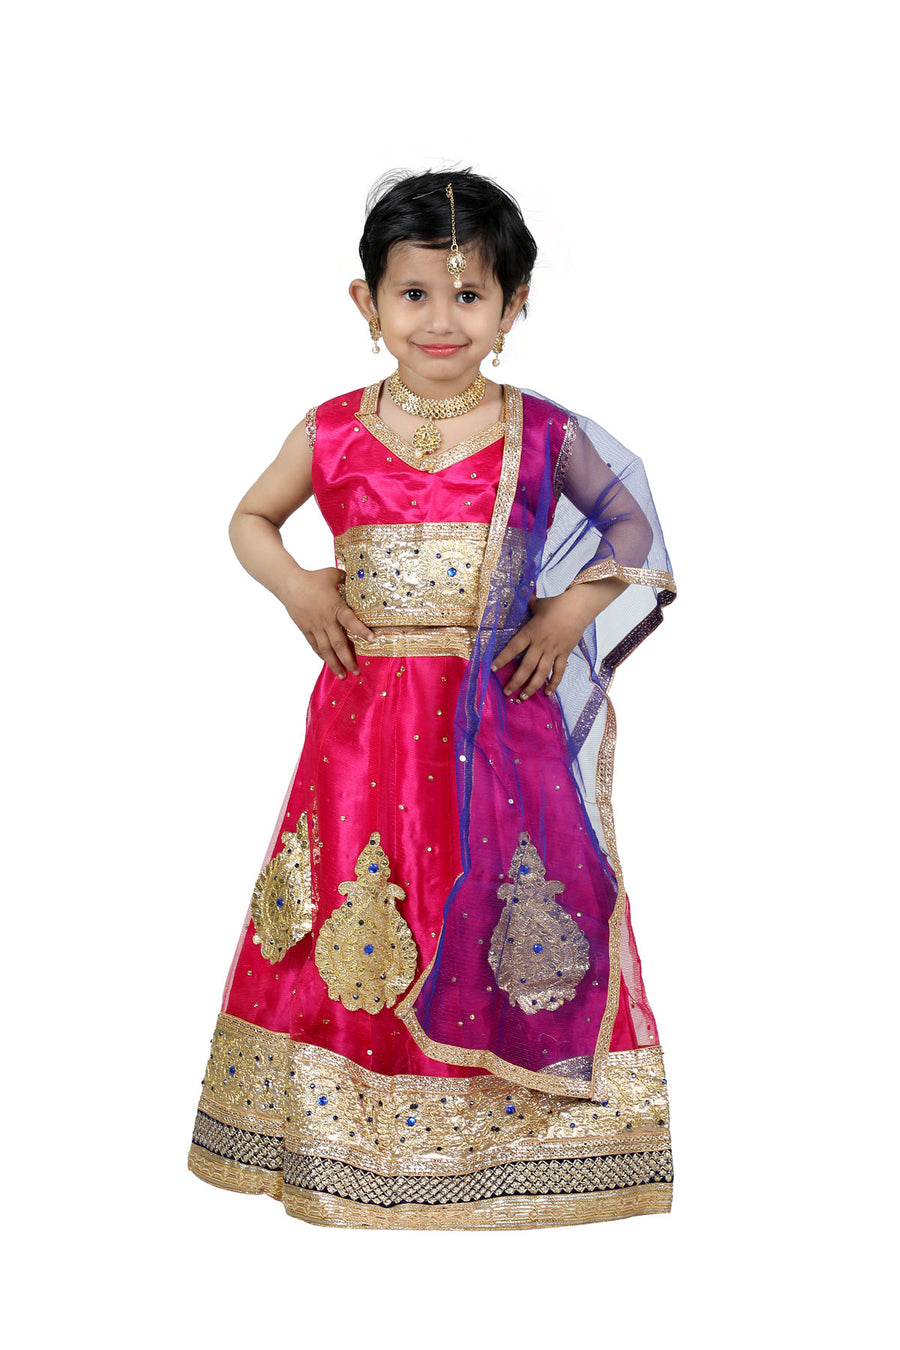 Kaku Fancy Dresses Krishna Costume for Kids | Kids Krishna Dress for  Janmashtami/Kanha/Krishnaleela/Mythological Character Krishna Fancy Dress  Costume for Boys/Girls - Yellow (1-2 Years) : Amazon.in: Fashion